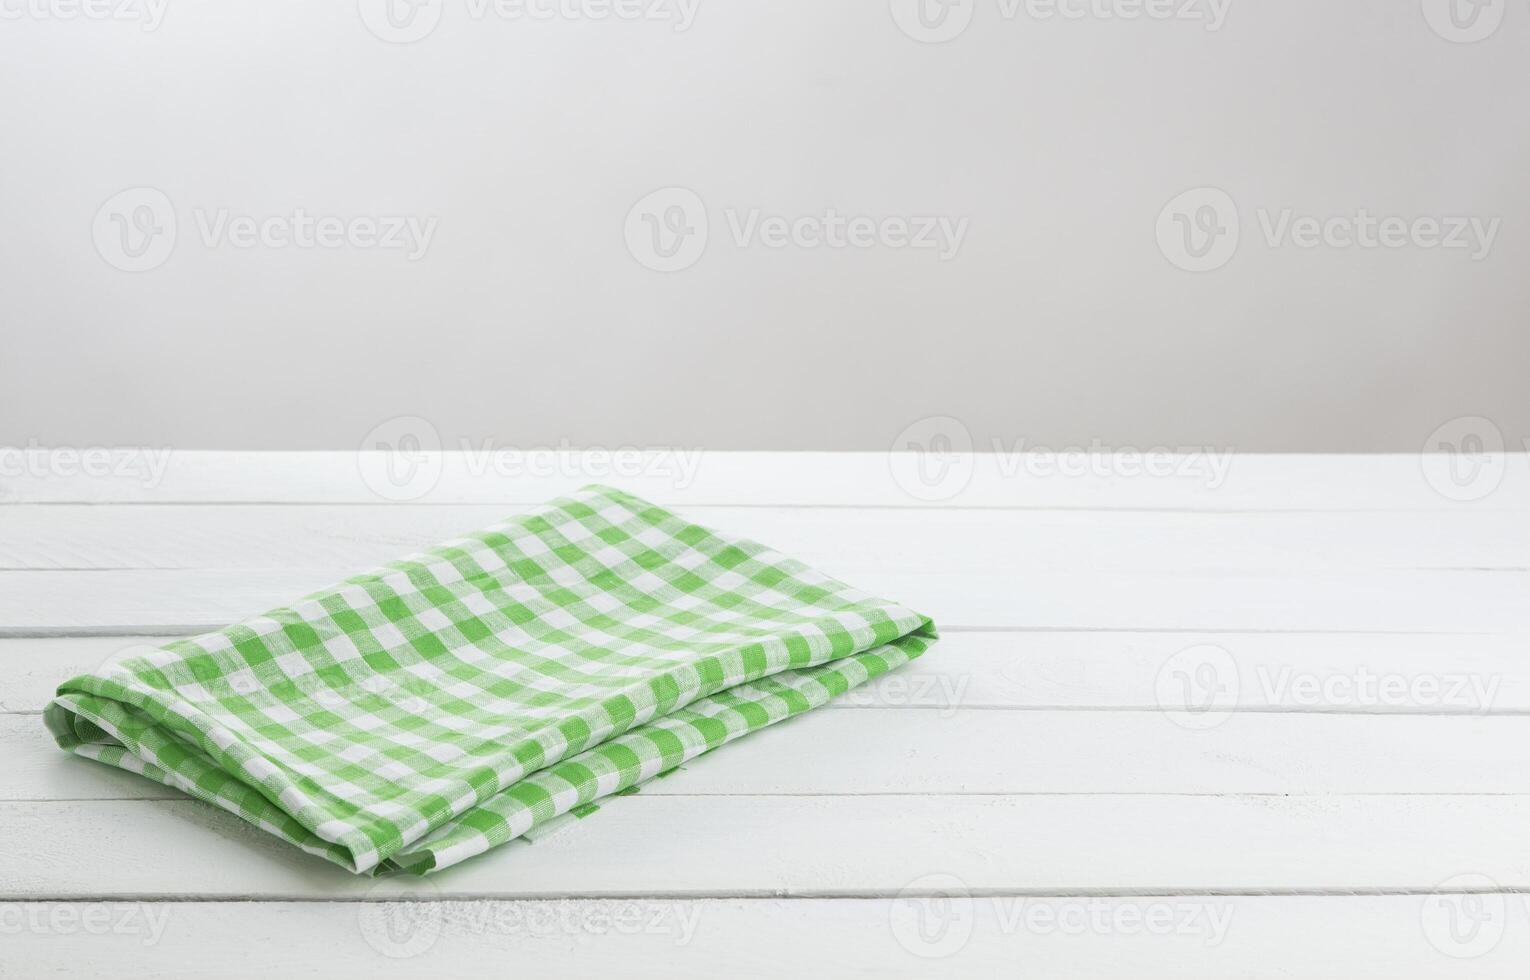 verde guardada toalha de mesa em branco mesa fundo foto